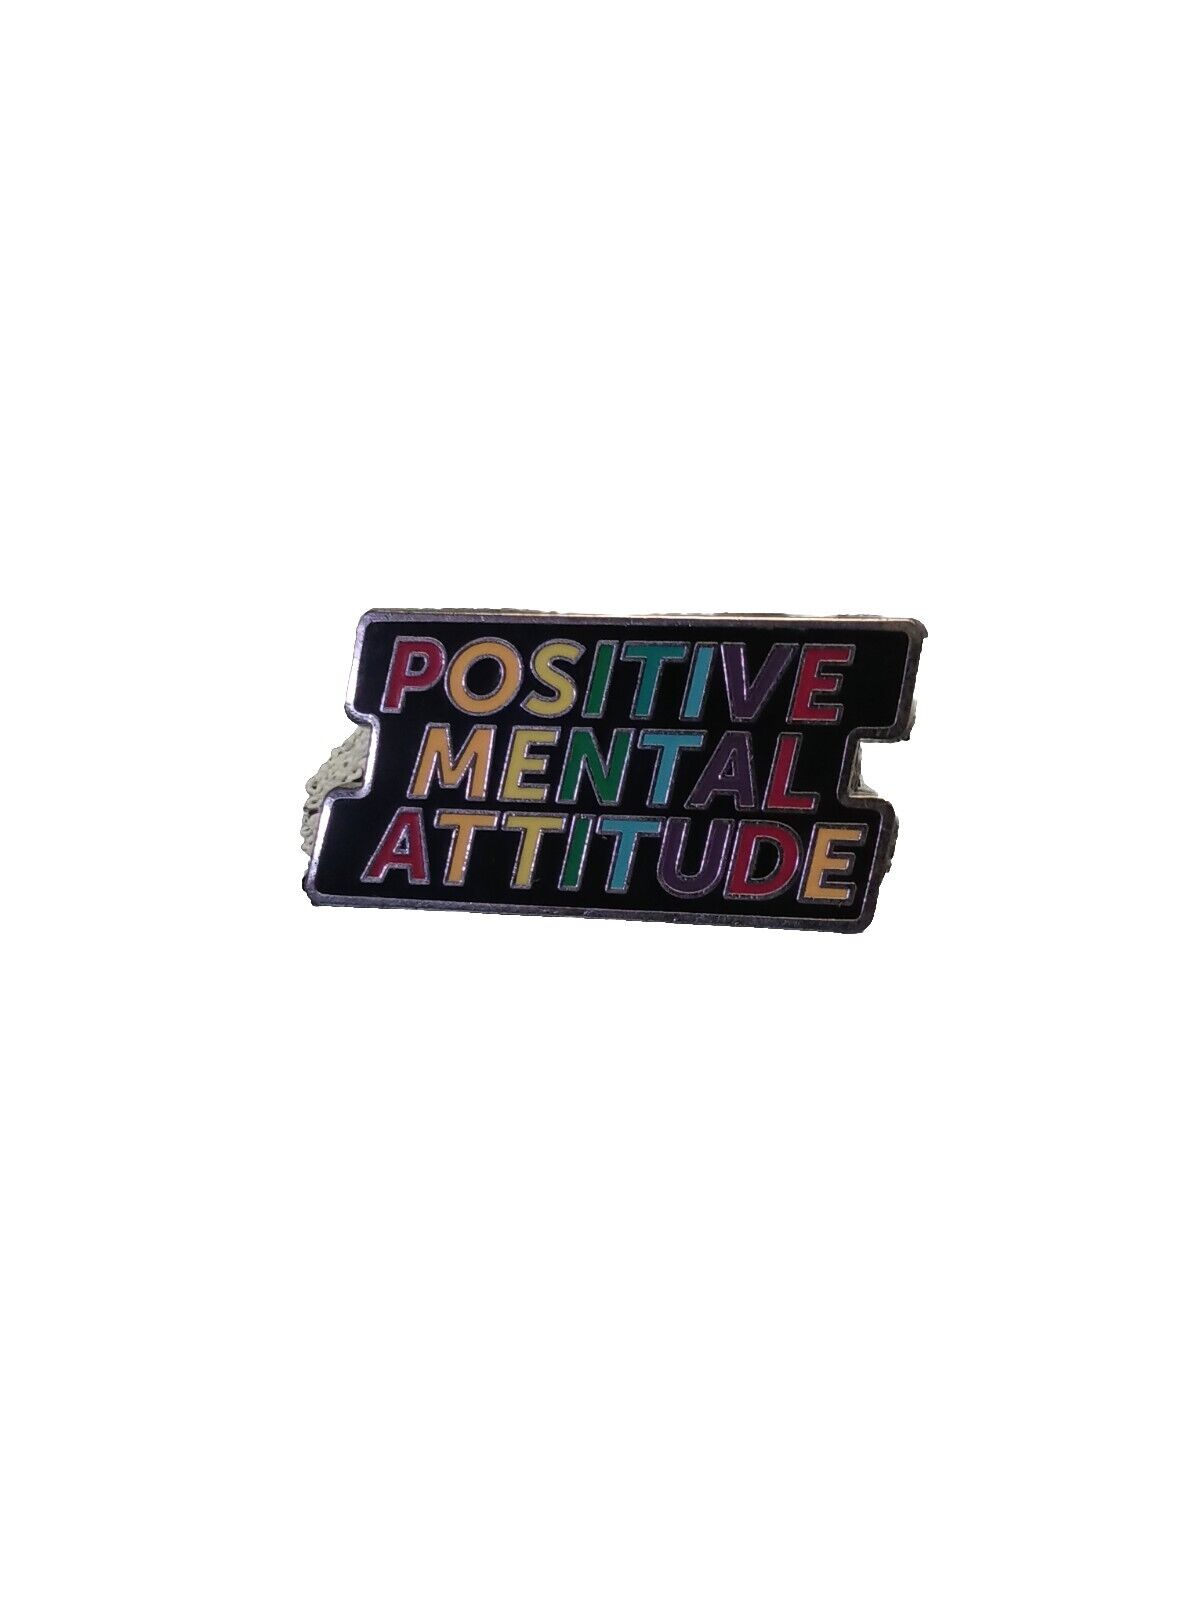 Jacksepticeye June 2019 Positive Mental Attitude PMA Lapel Hat Jacket Pin